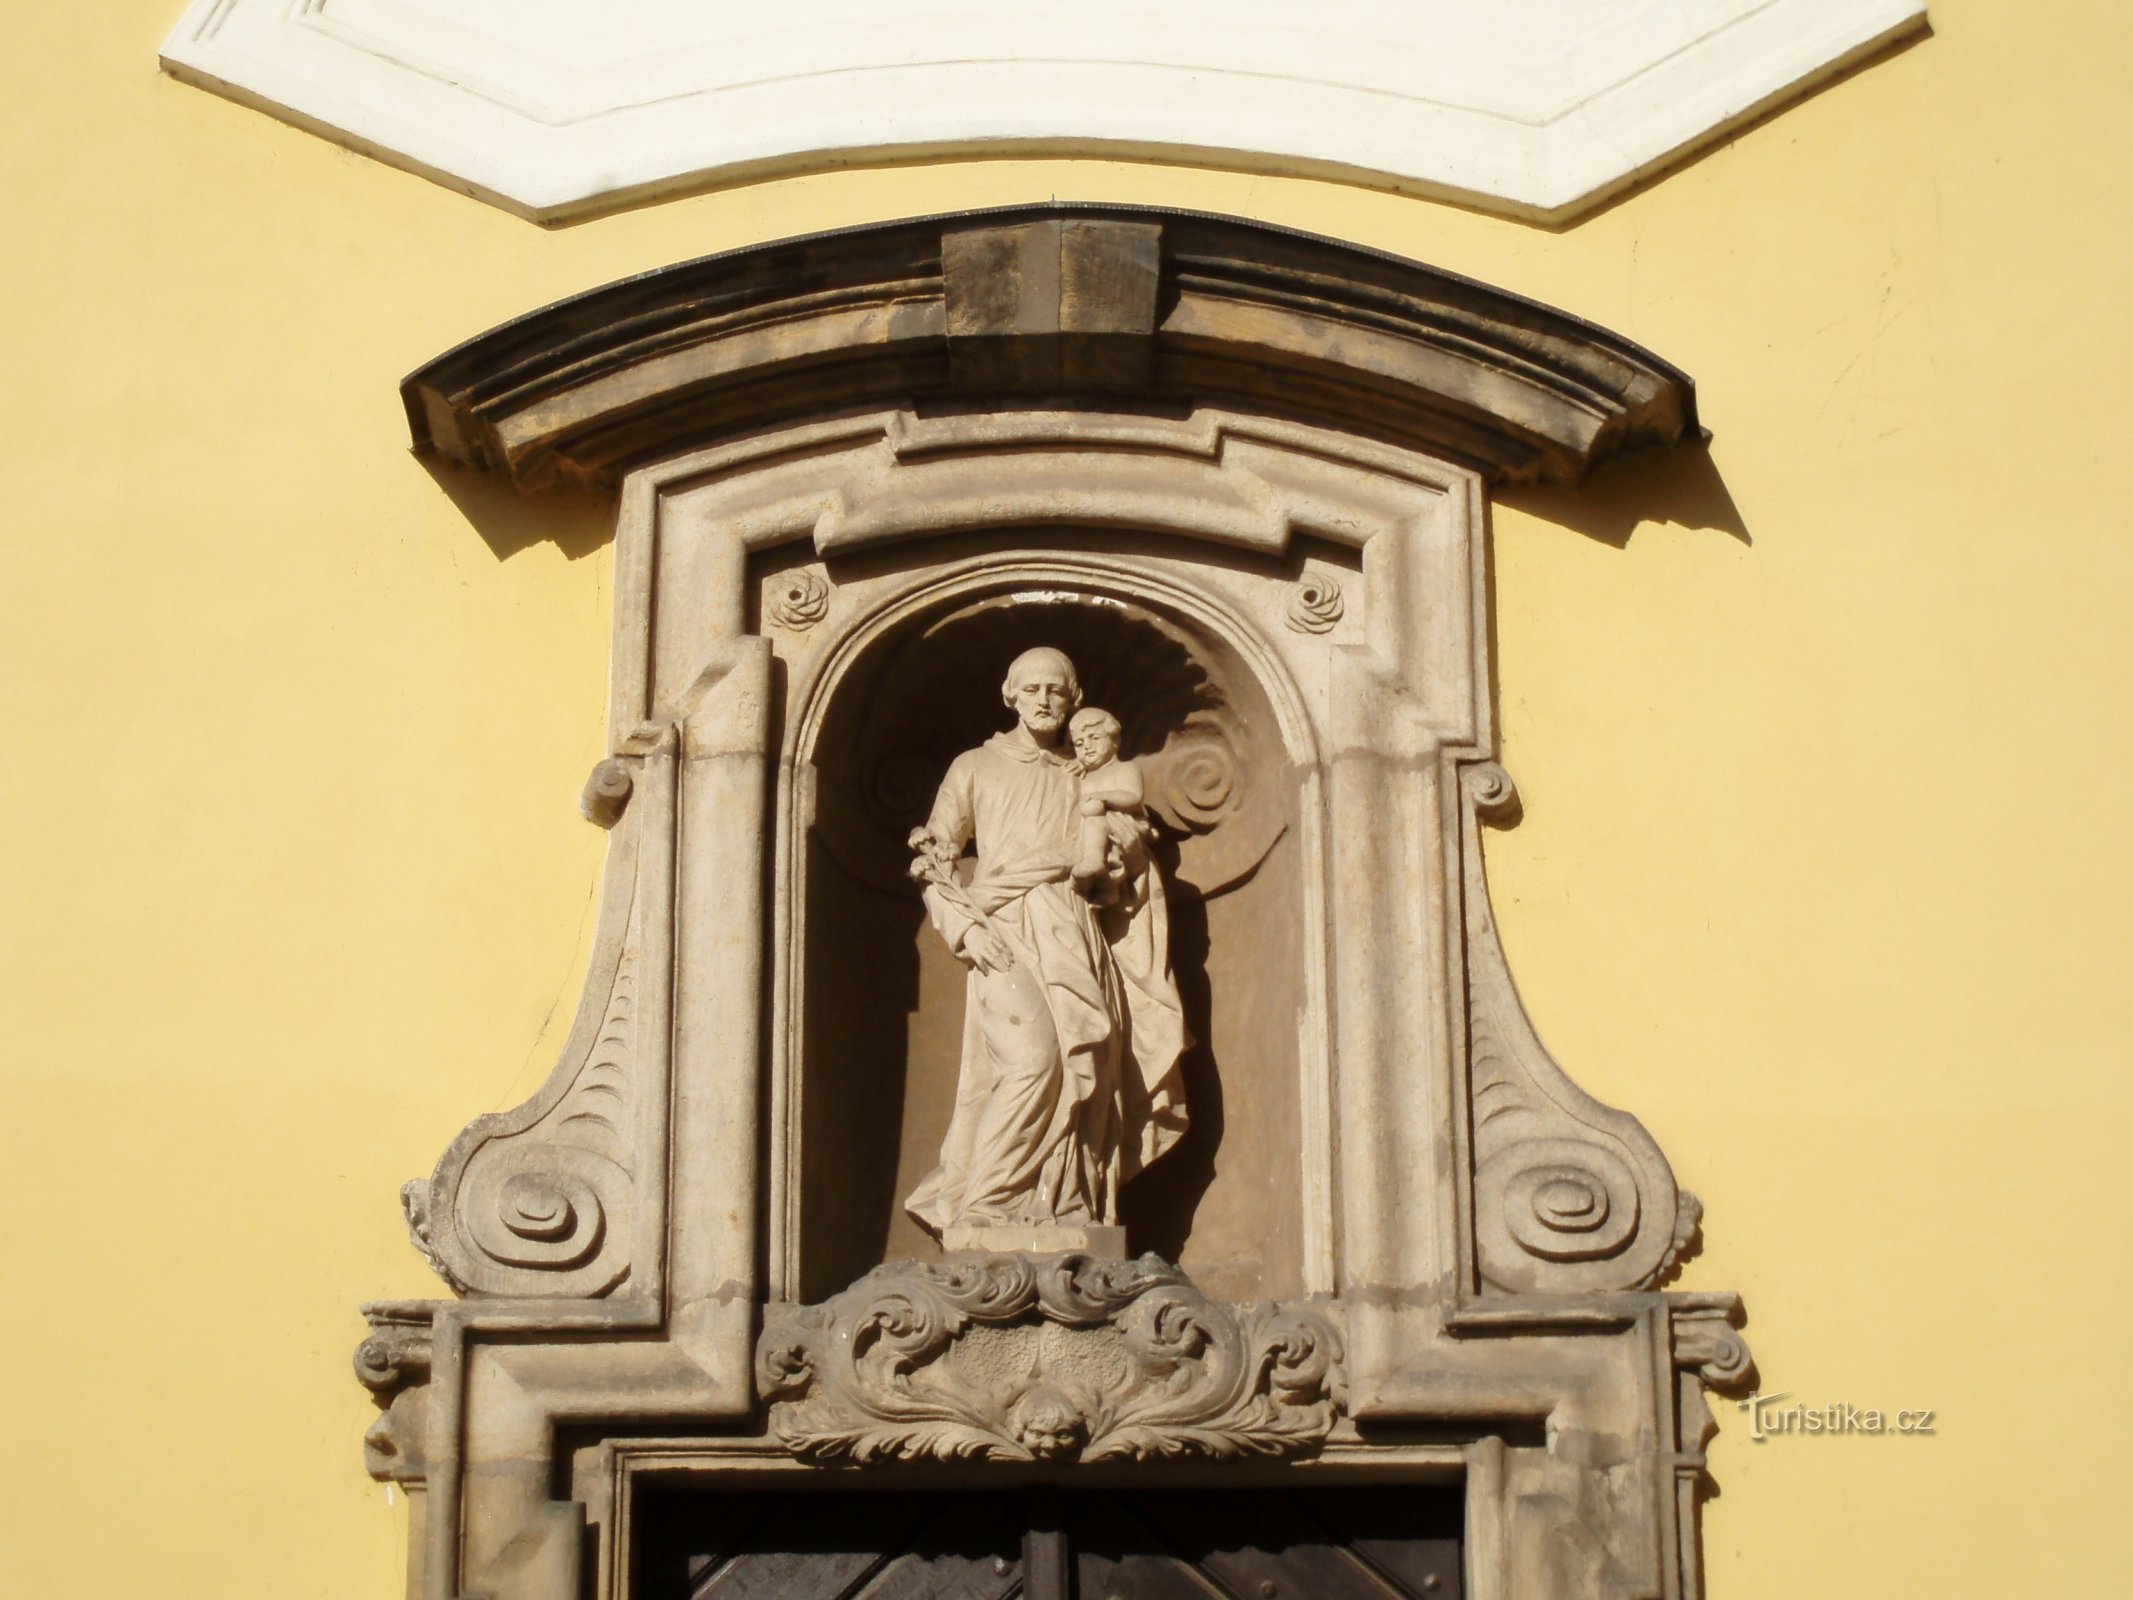 Prikaz sv. Josipa iznad ulaza u kapelu istoga sveca (Hradec Králové, 21.6.2009.)